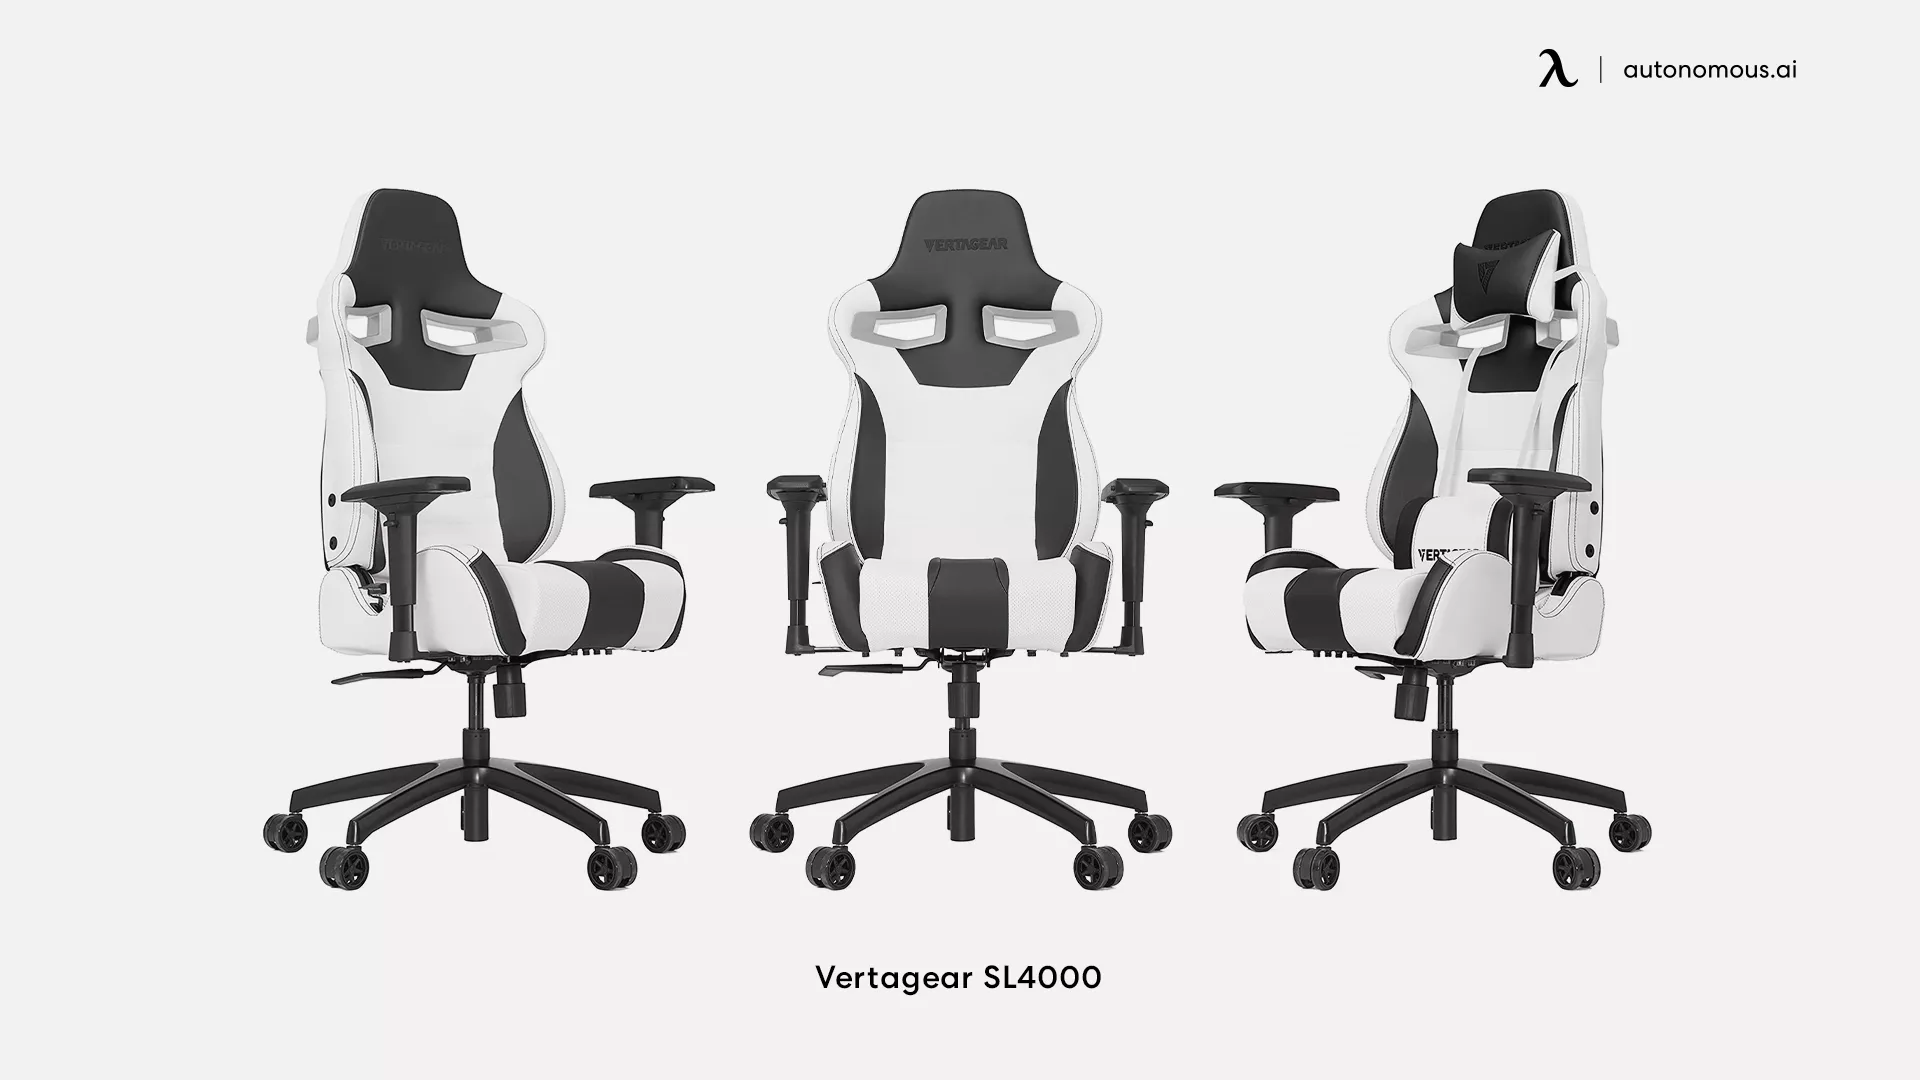 Vertagear SL4000 white gaming chair